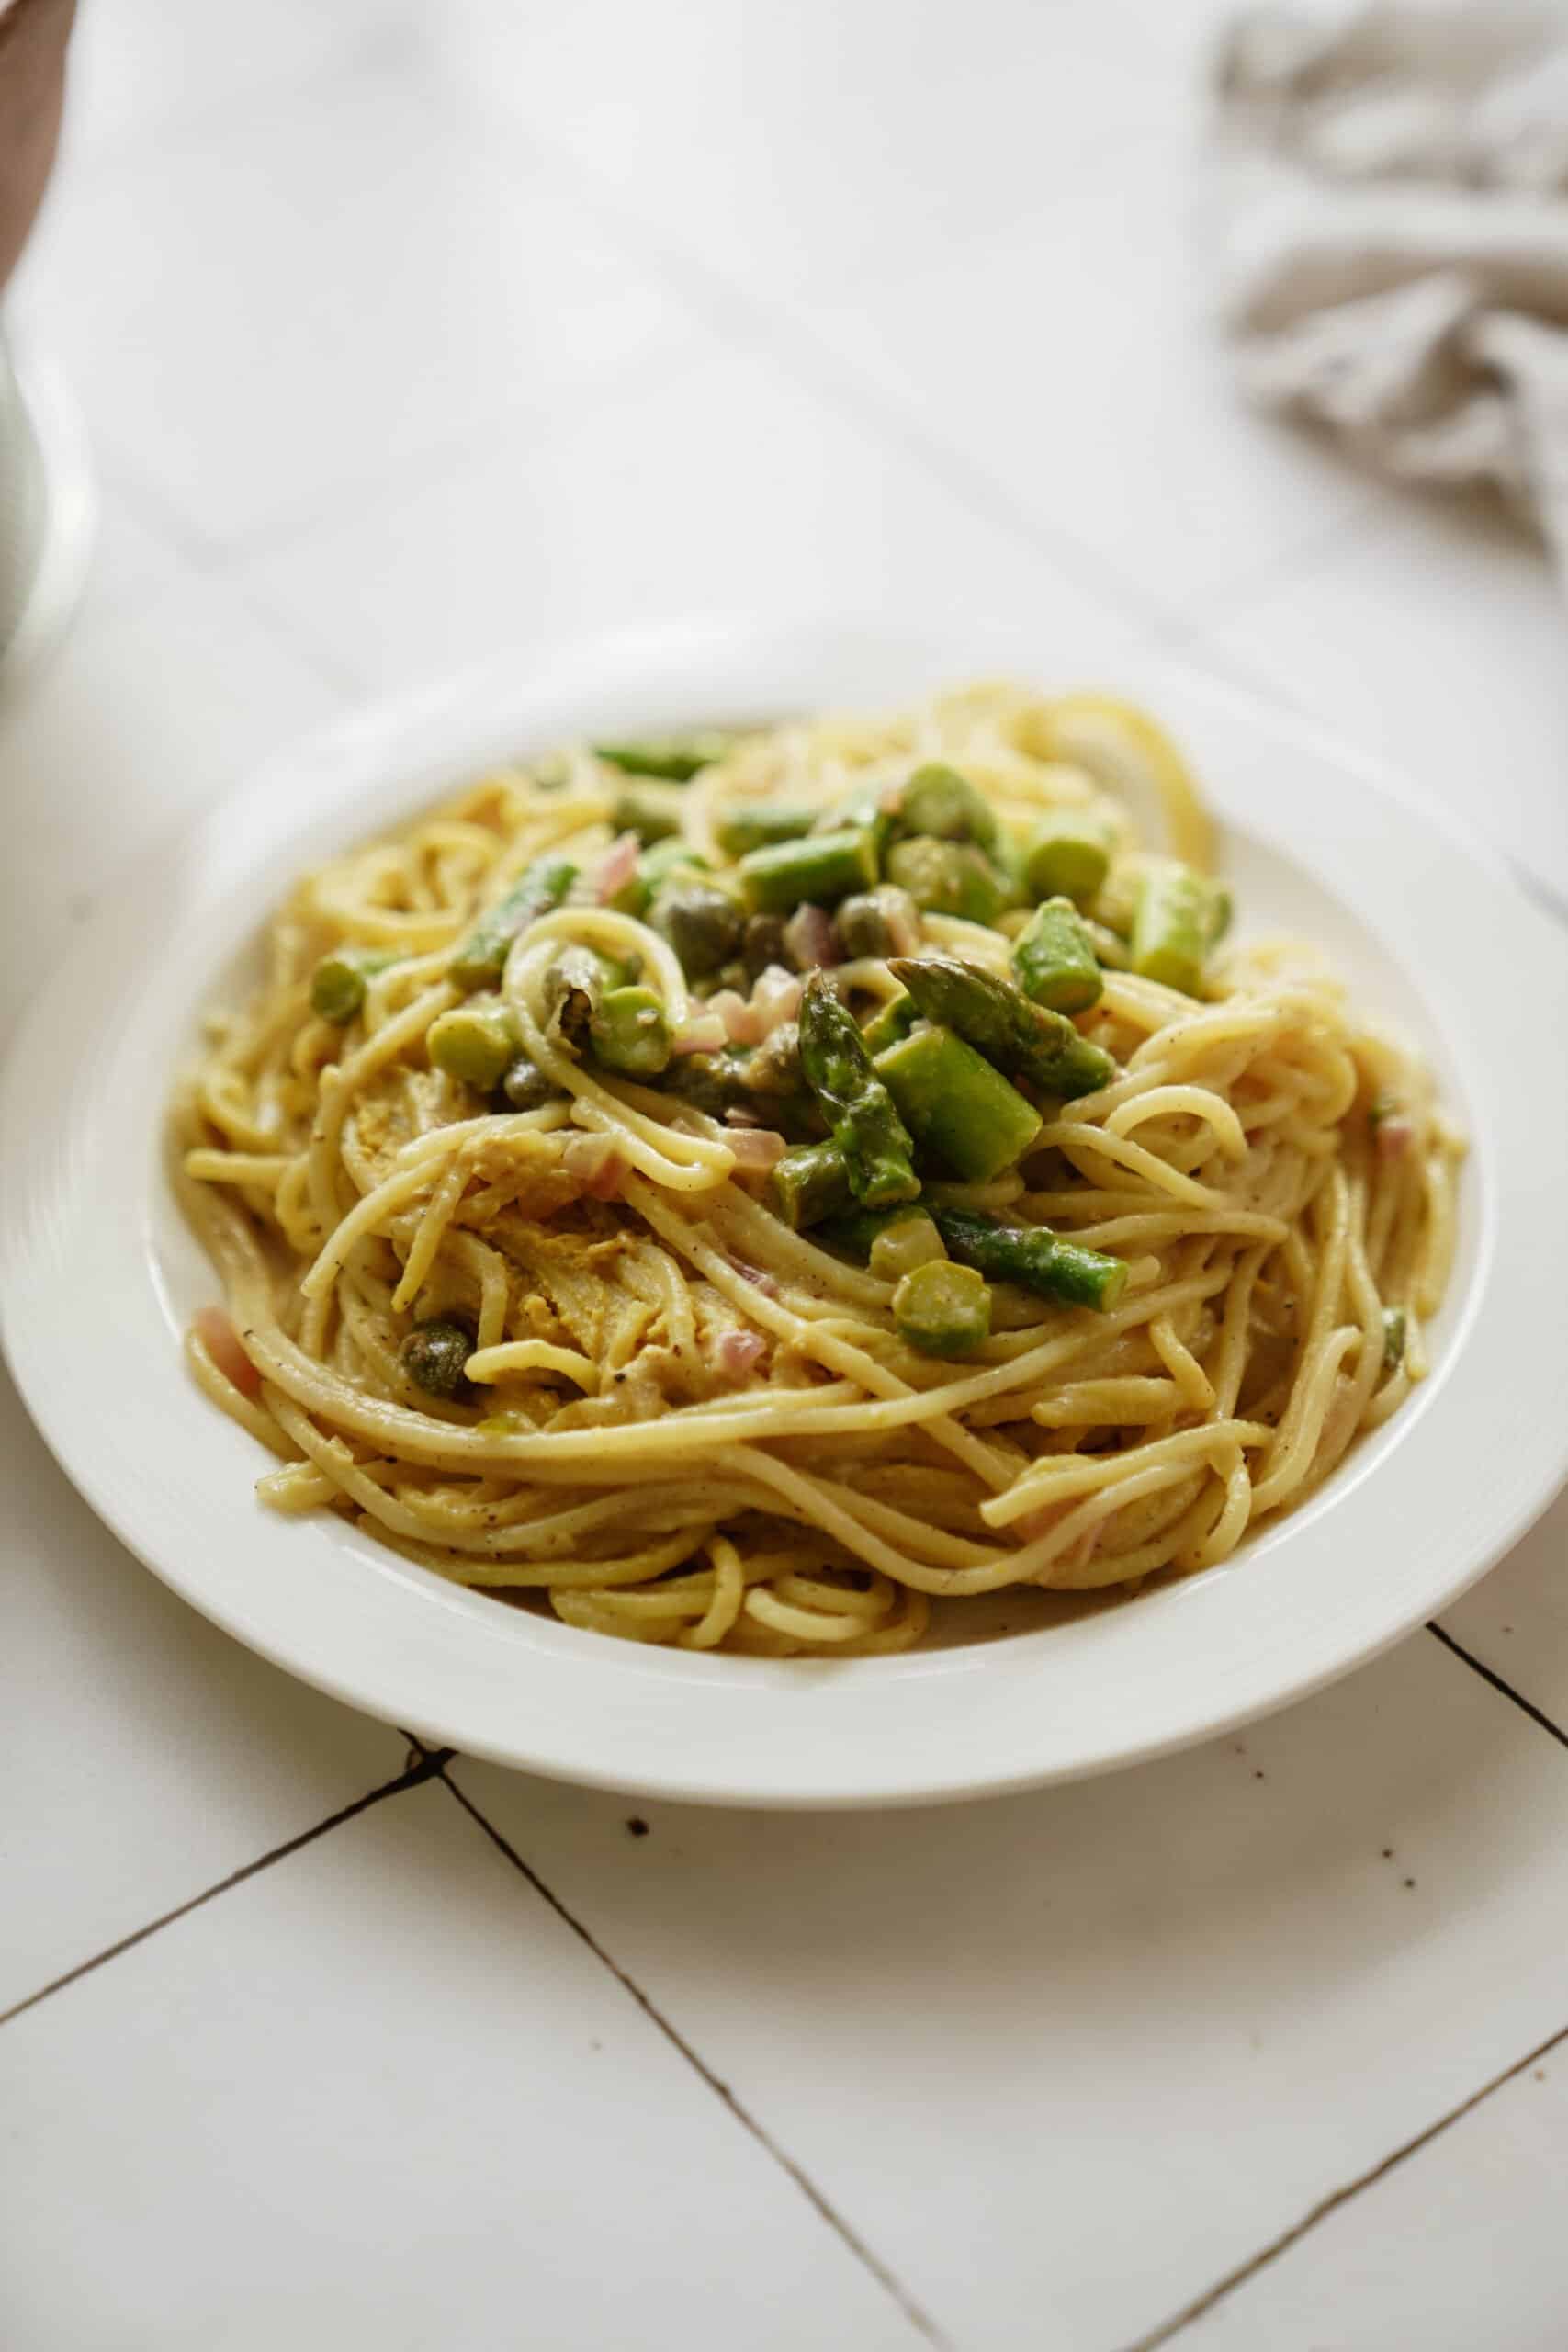 Lemon asparagus pasta on a white plate